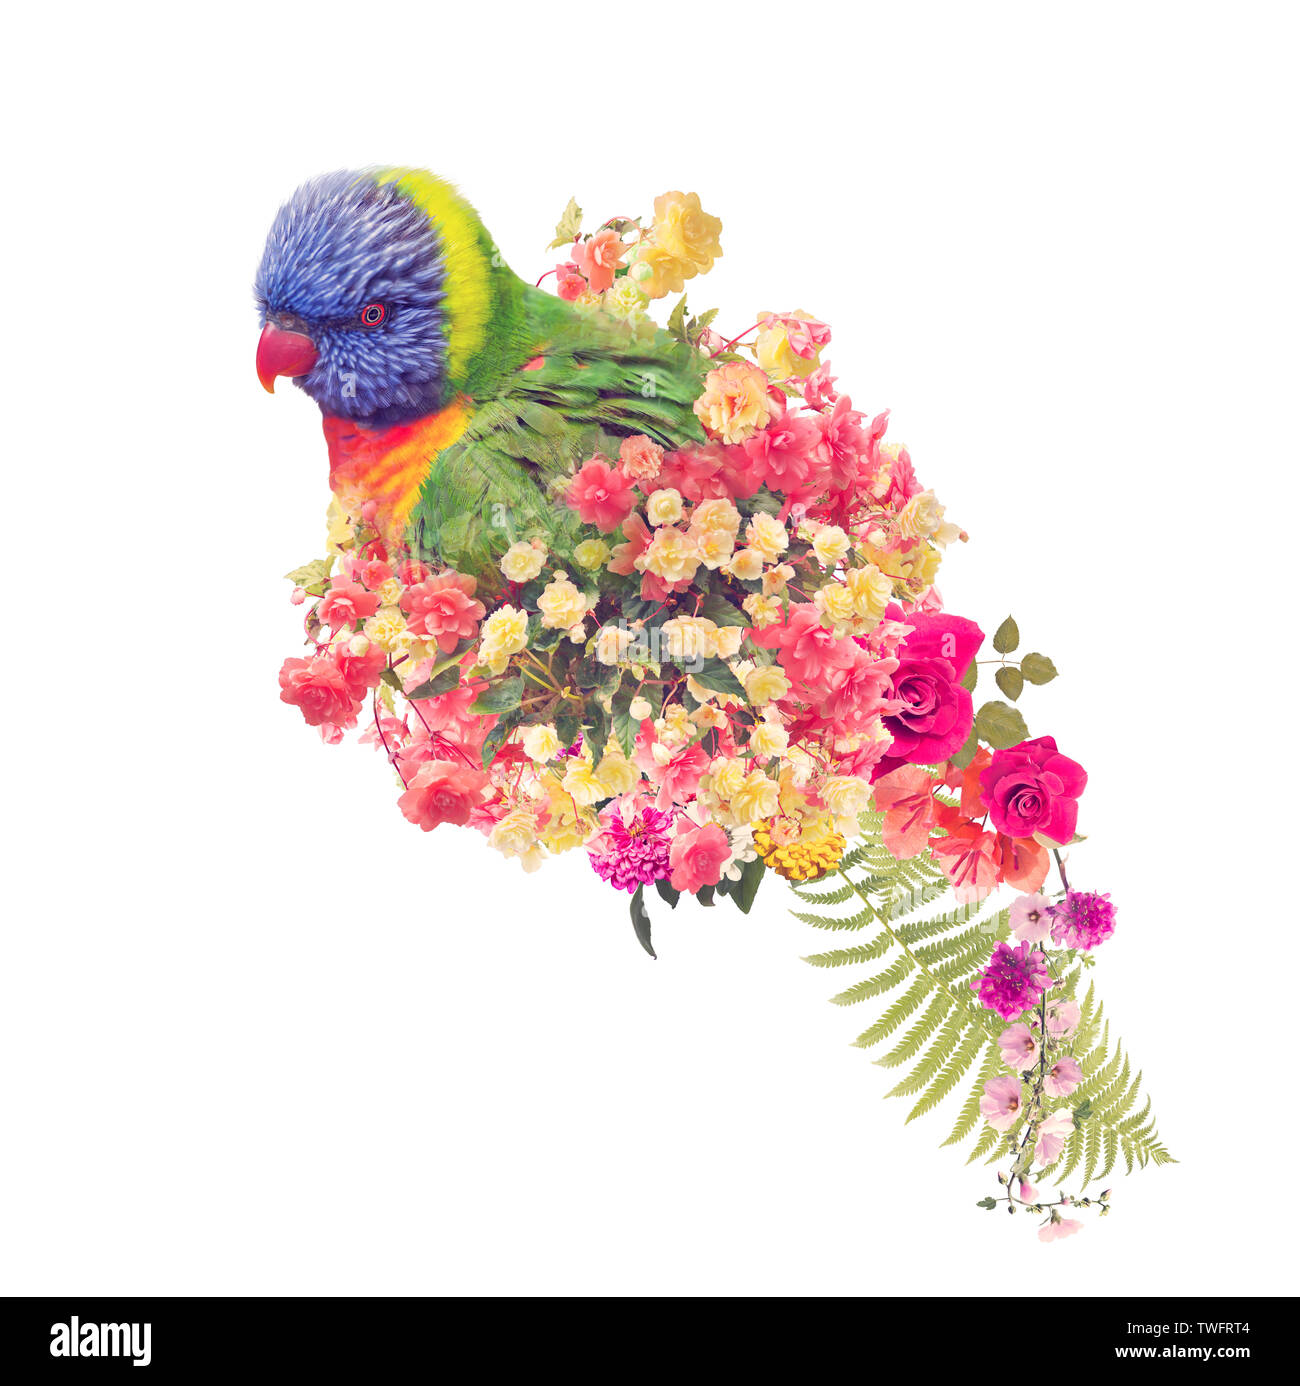 Rainbow Lorikeet Papageien mit Blumen anf verlässt. doppelten Effekt der Exposition Stockfoto